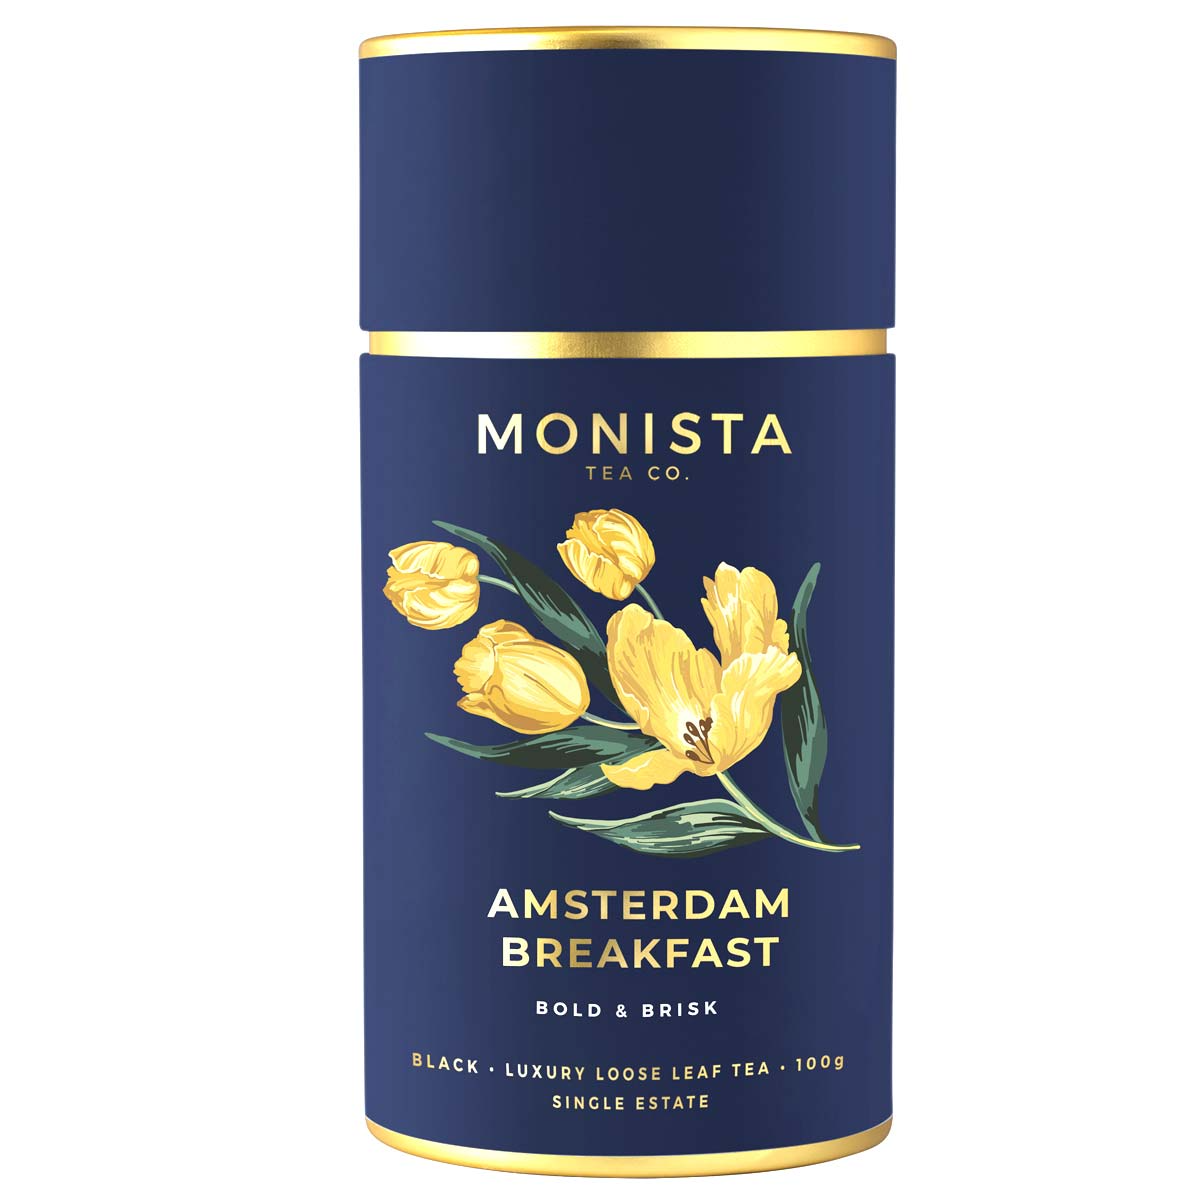 Monista Tea Co. - Amsterdam Breakfast Tea